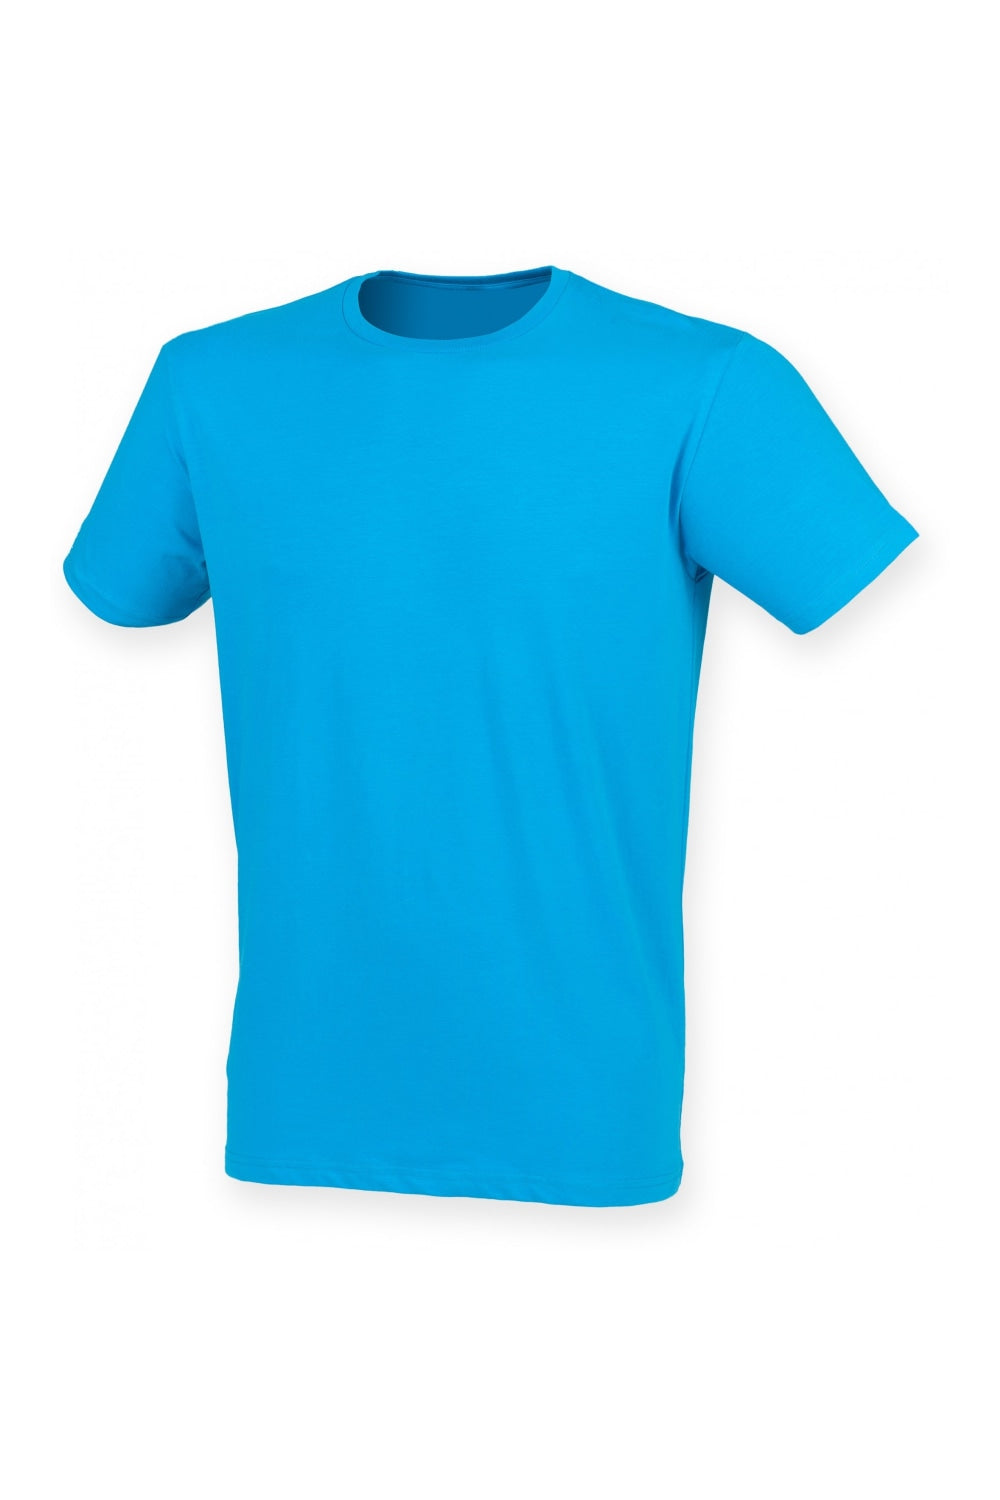 Skinni Fit Men Mens Feel Good Stretch Short Sleeve T-Shirt (Sapphire)